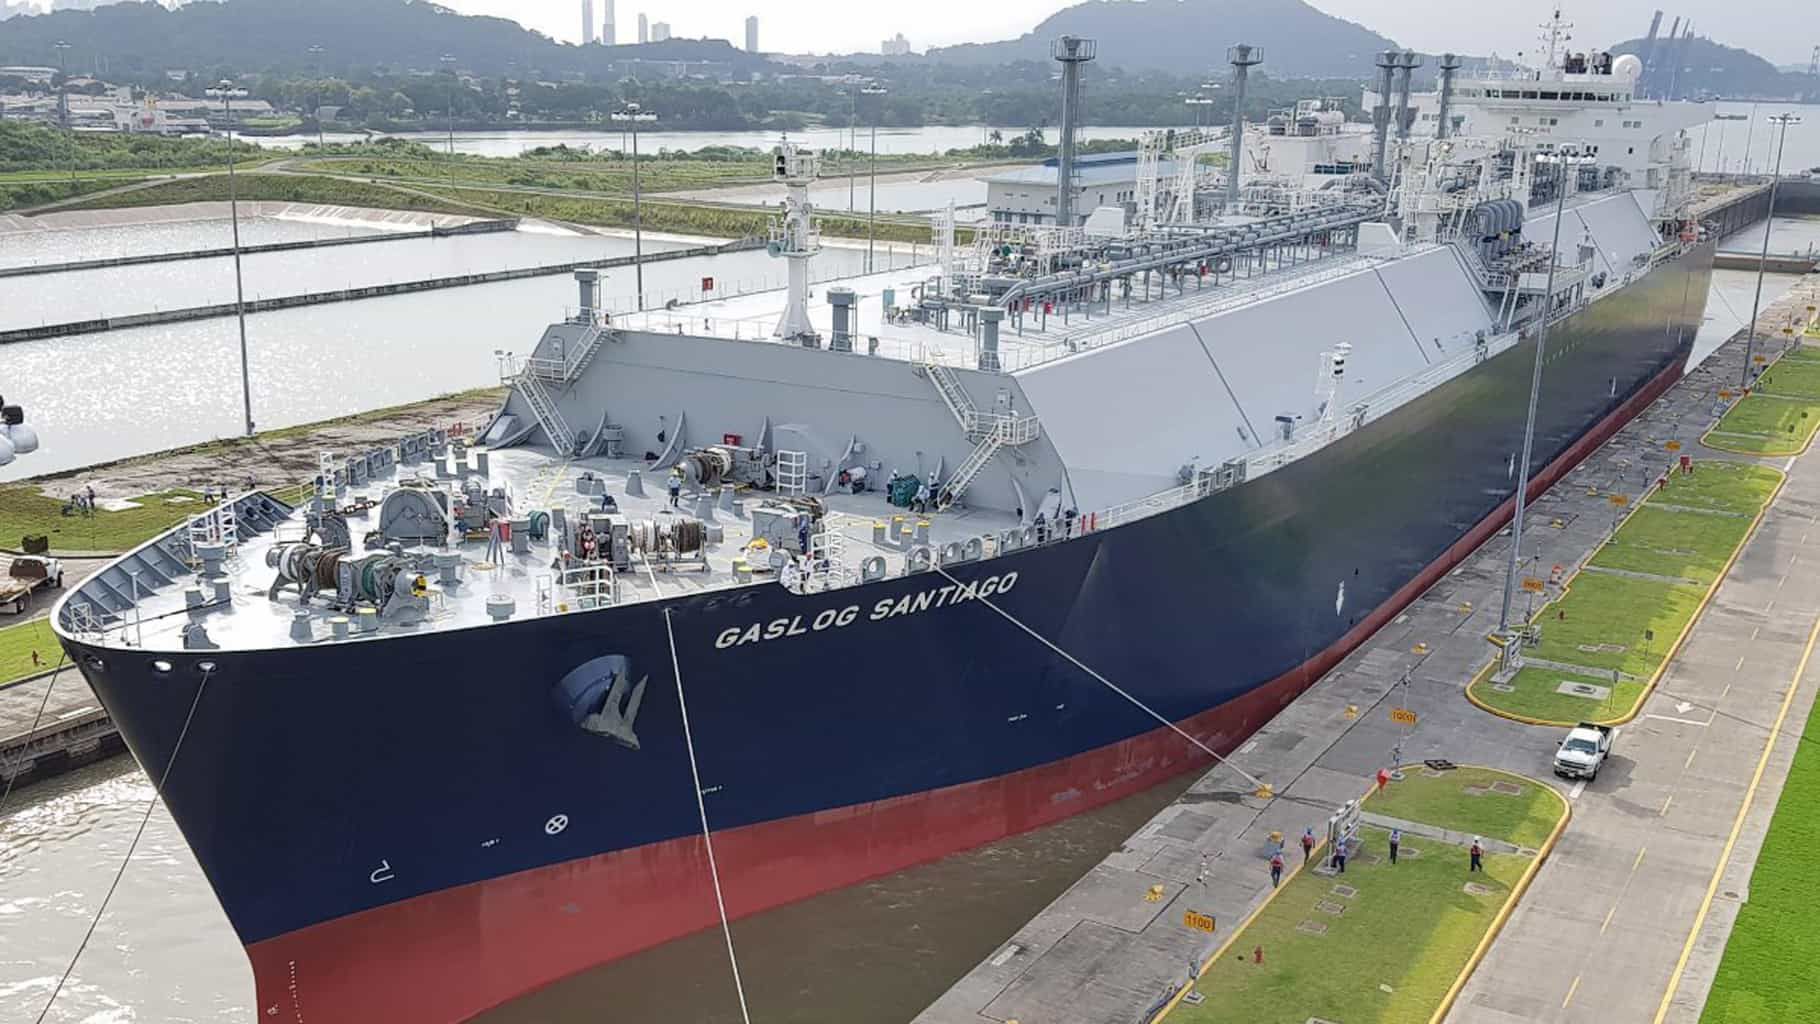 De LNG-carrier GasLog Santiago. (Foto GasLog Partners)